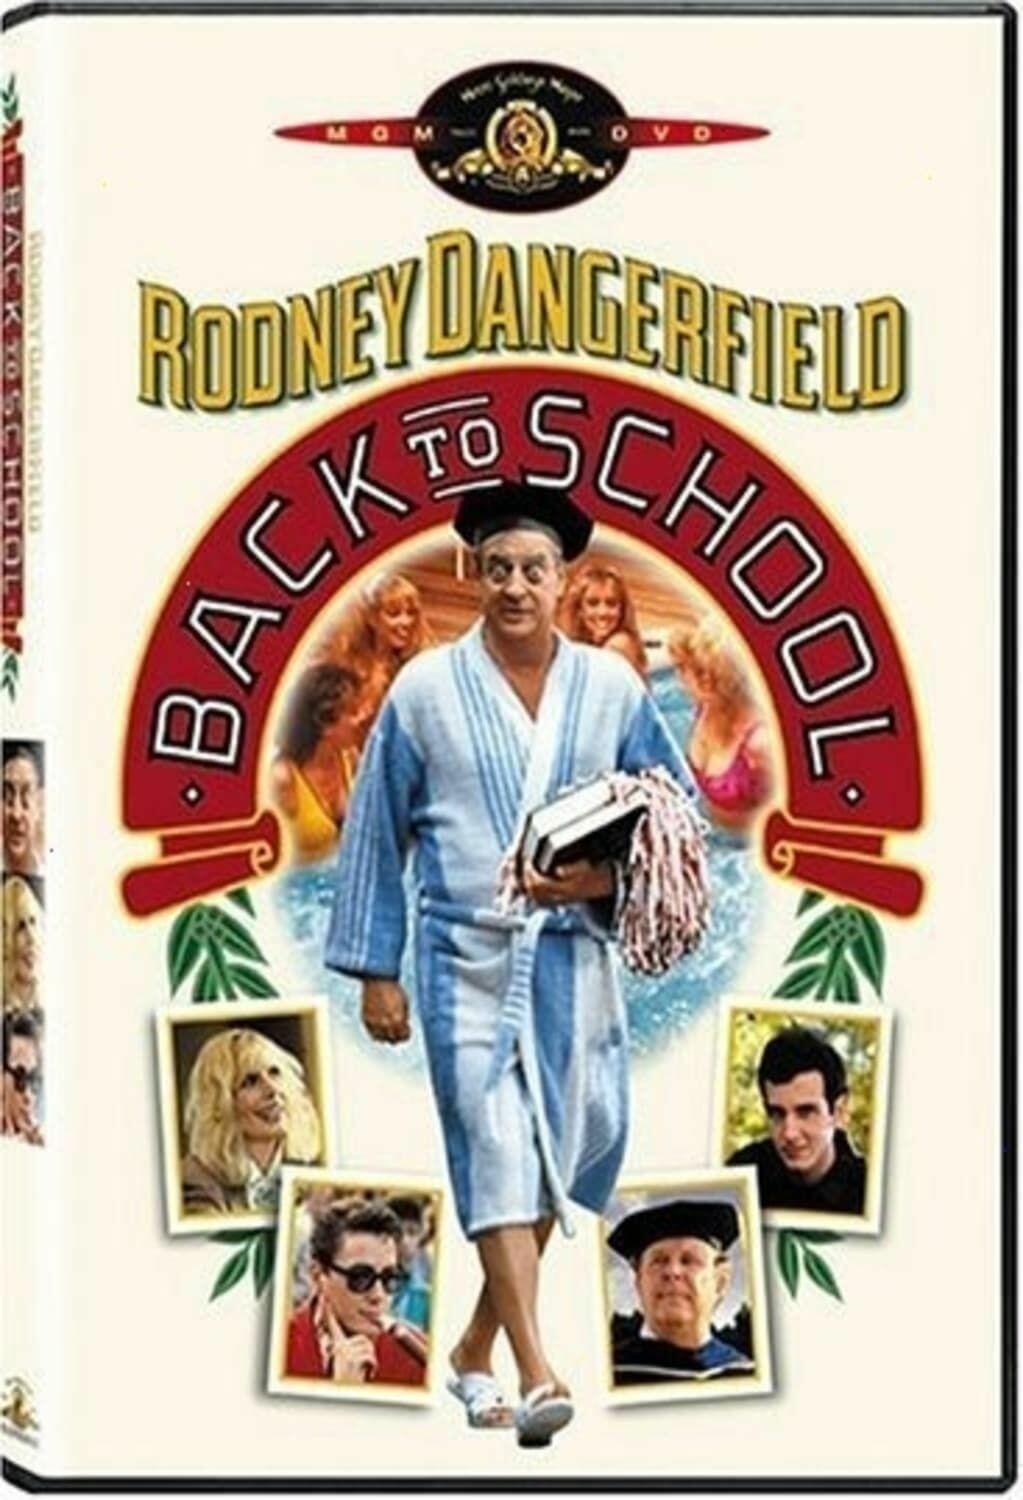 Back to School (DVD) on MovieShack